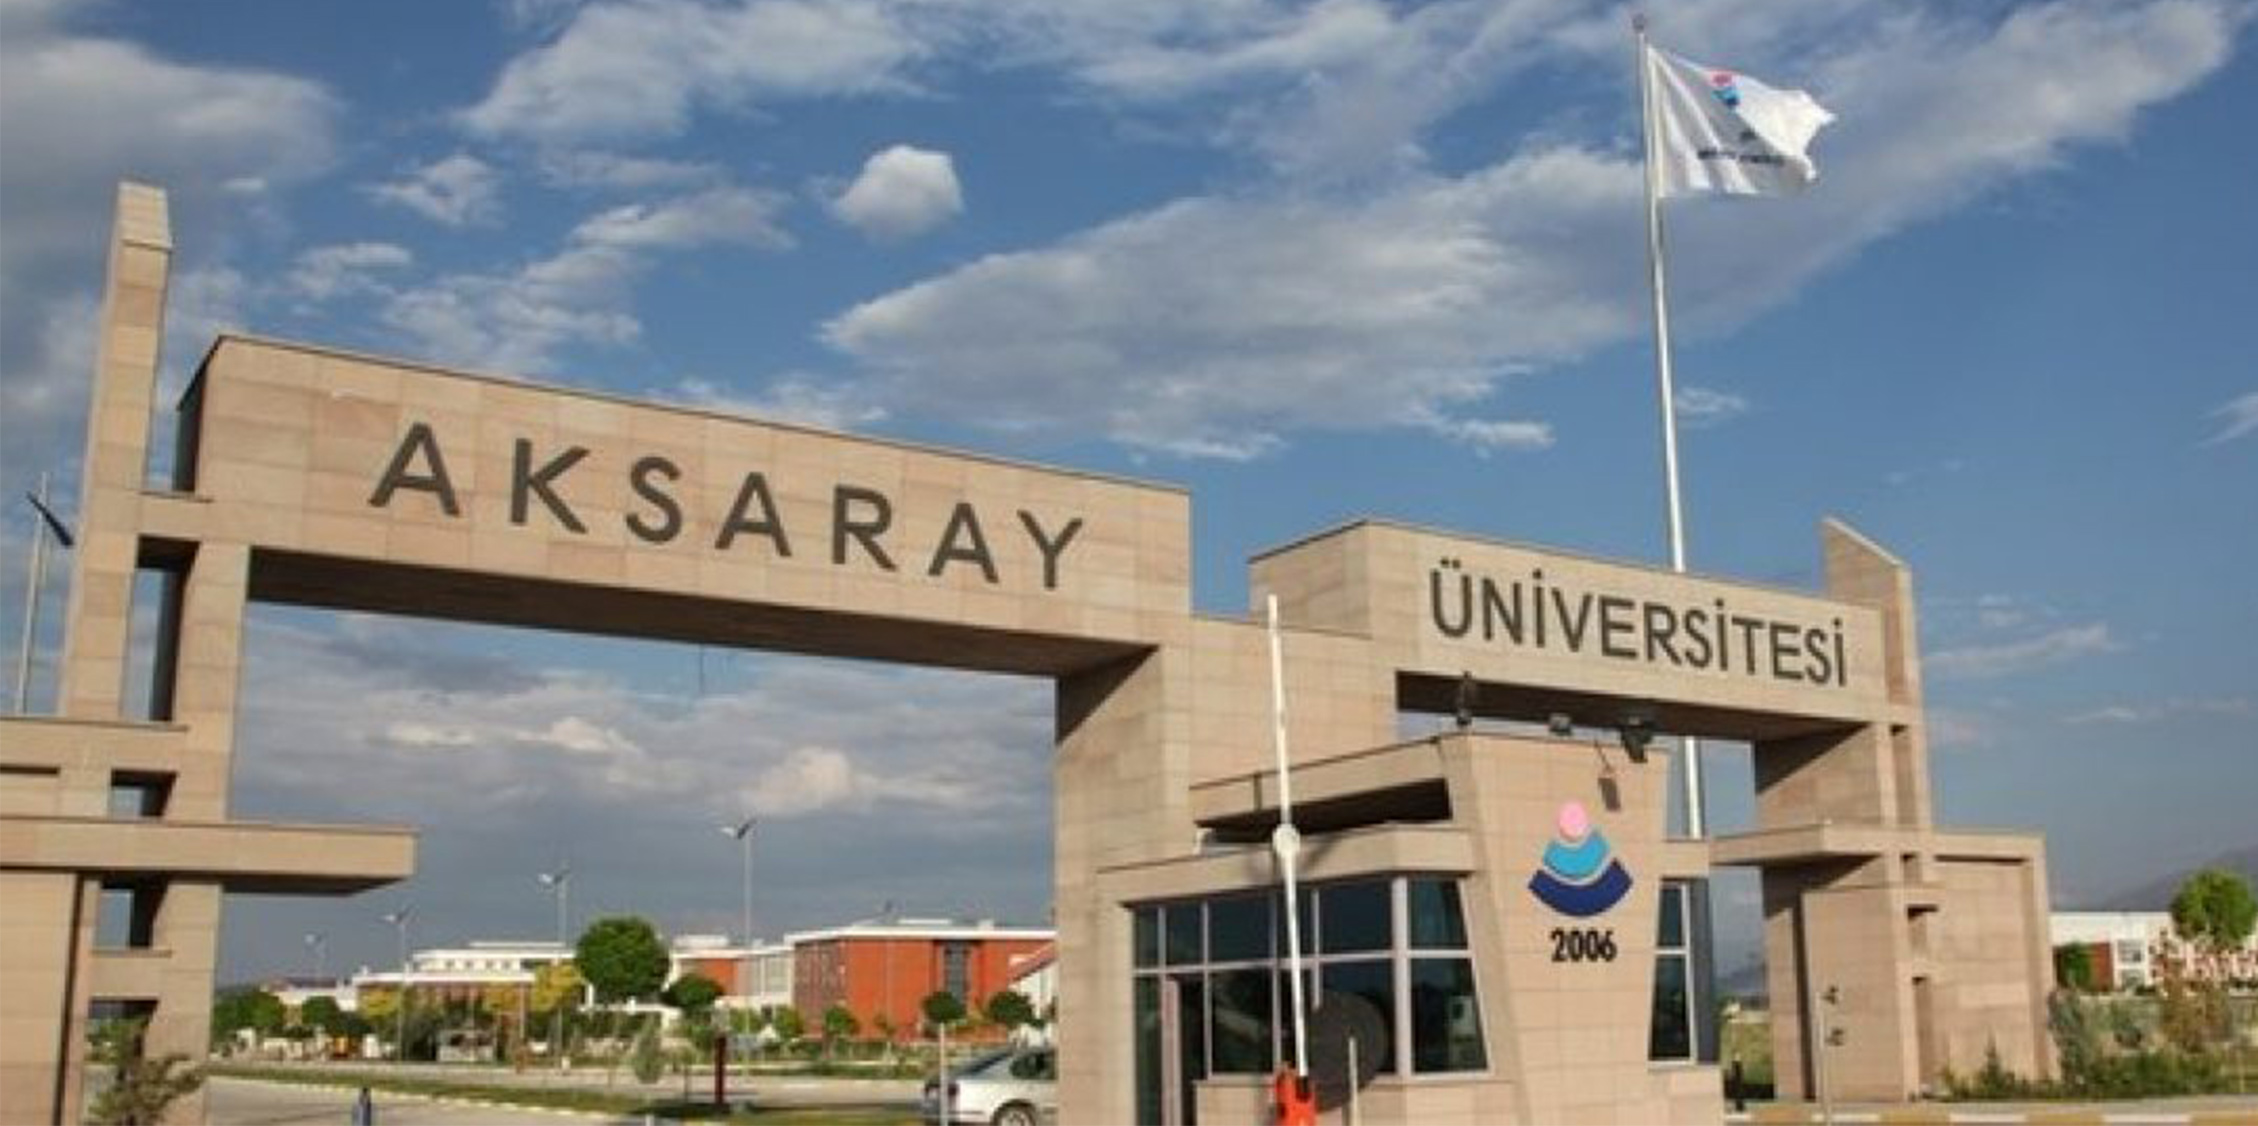 aksaray universitesi find and study 1 - Aksaray Üniversitesi